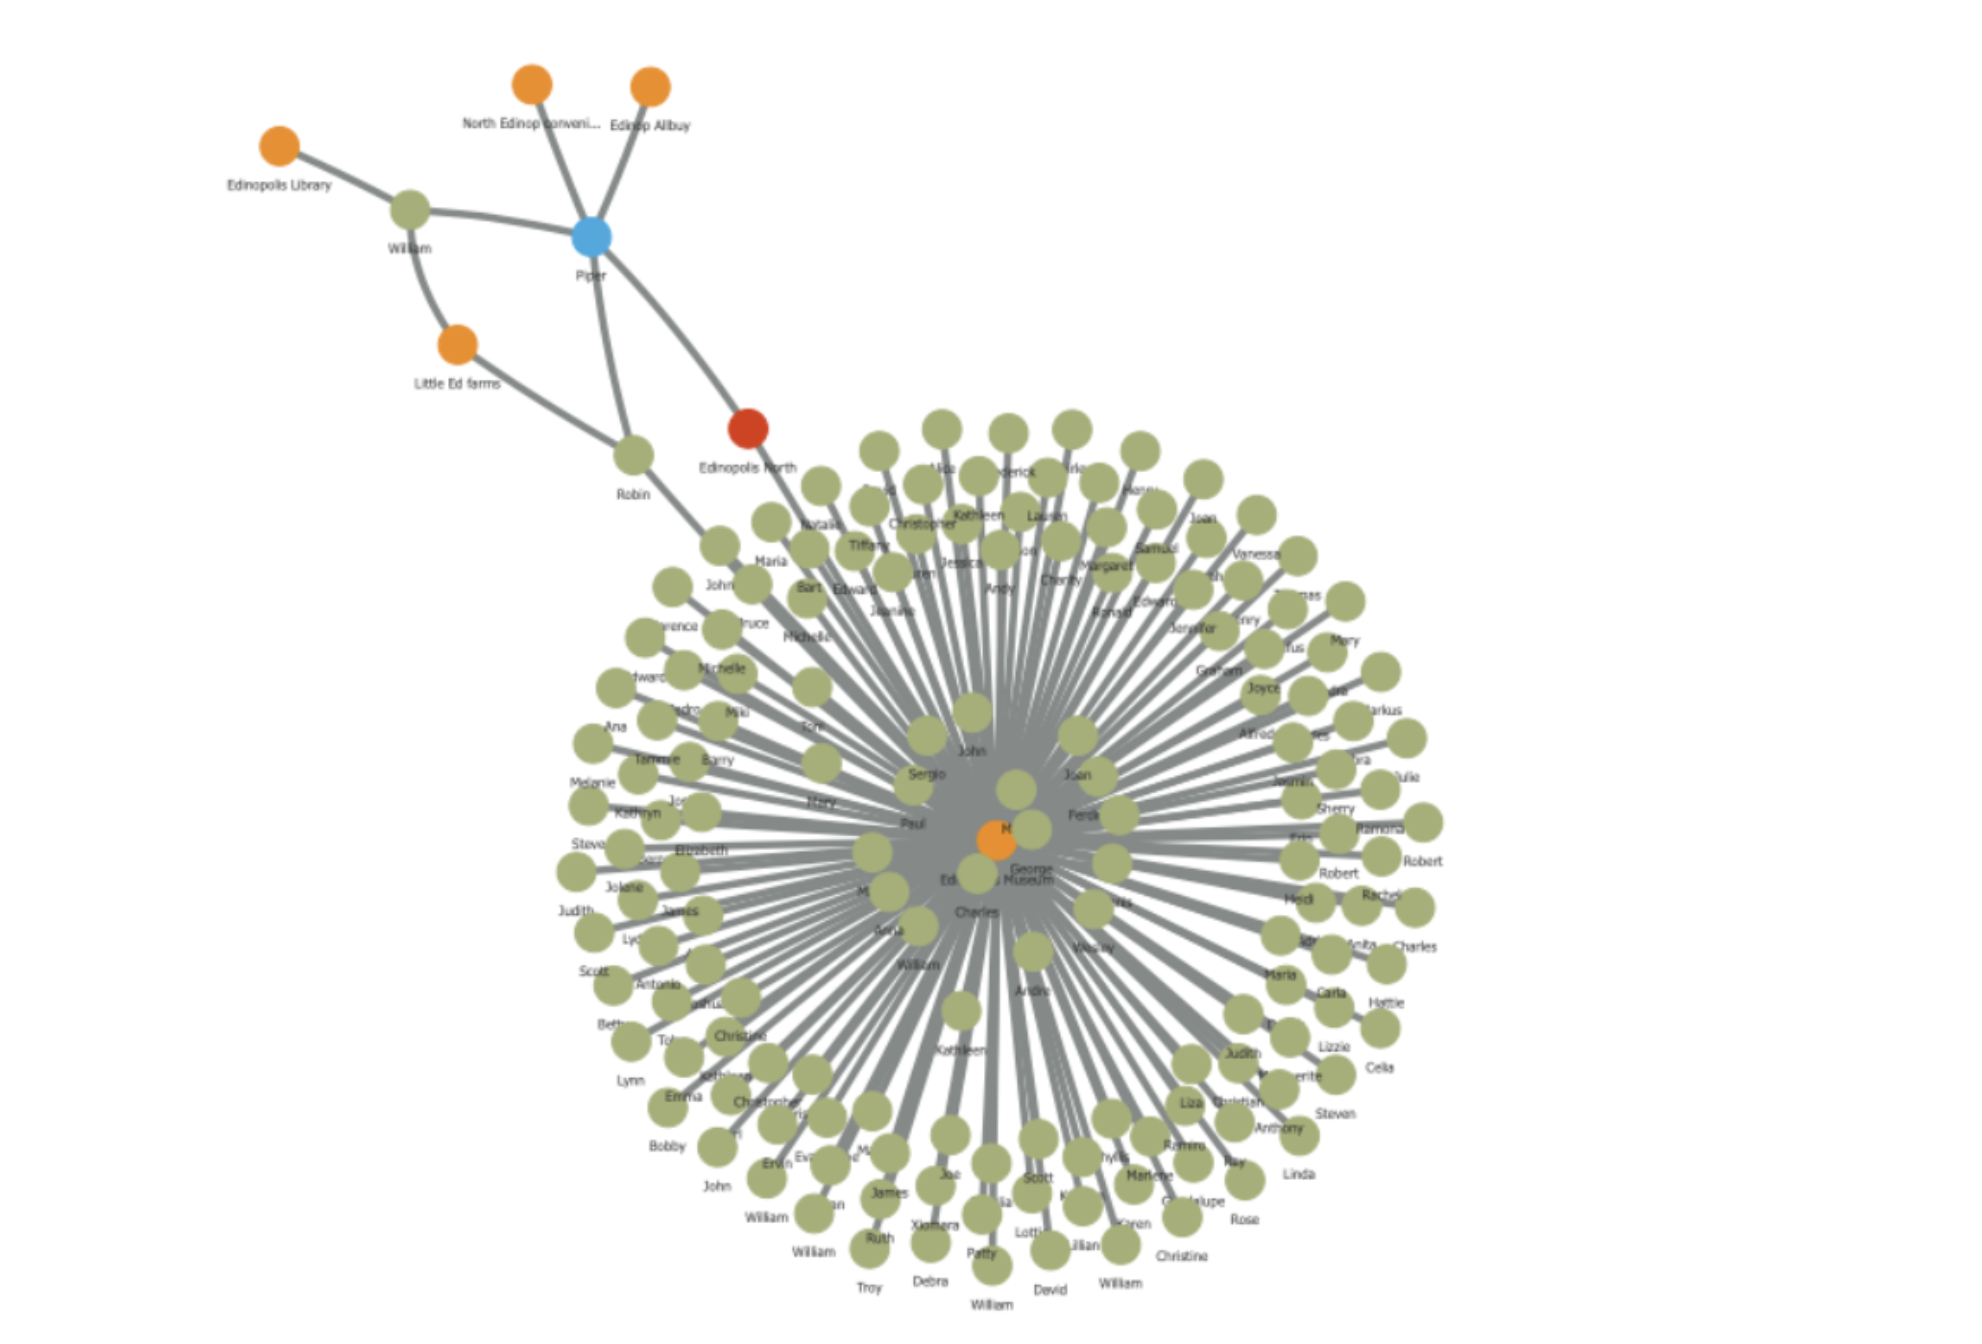 Network of nodes